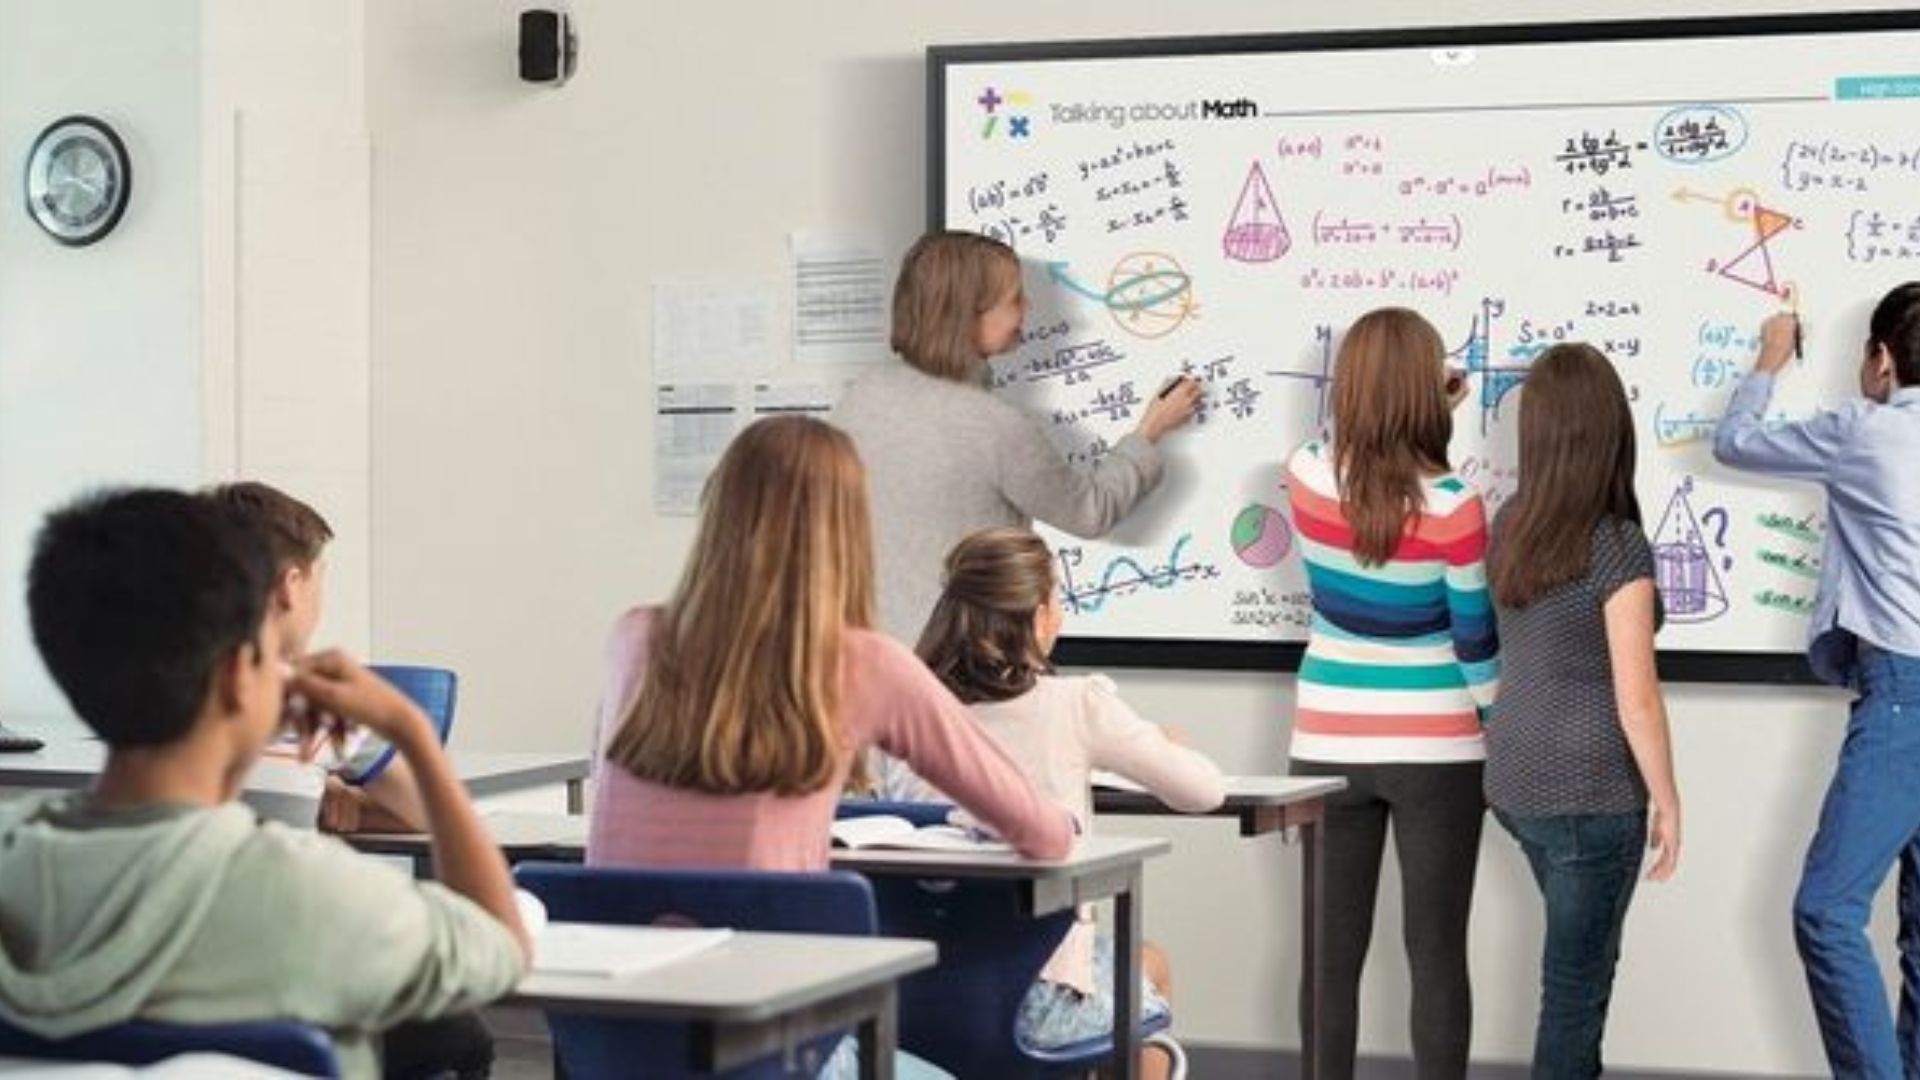 Teacher Teach a Students on Interactive whiteboard in classroom